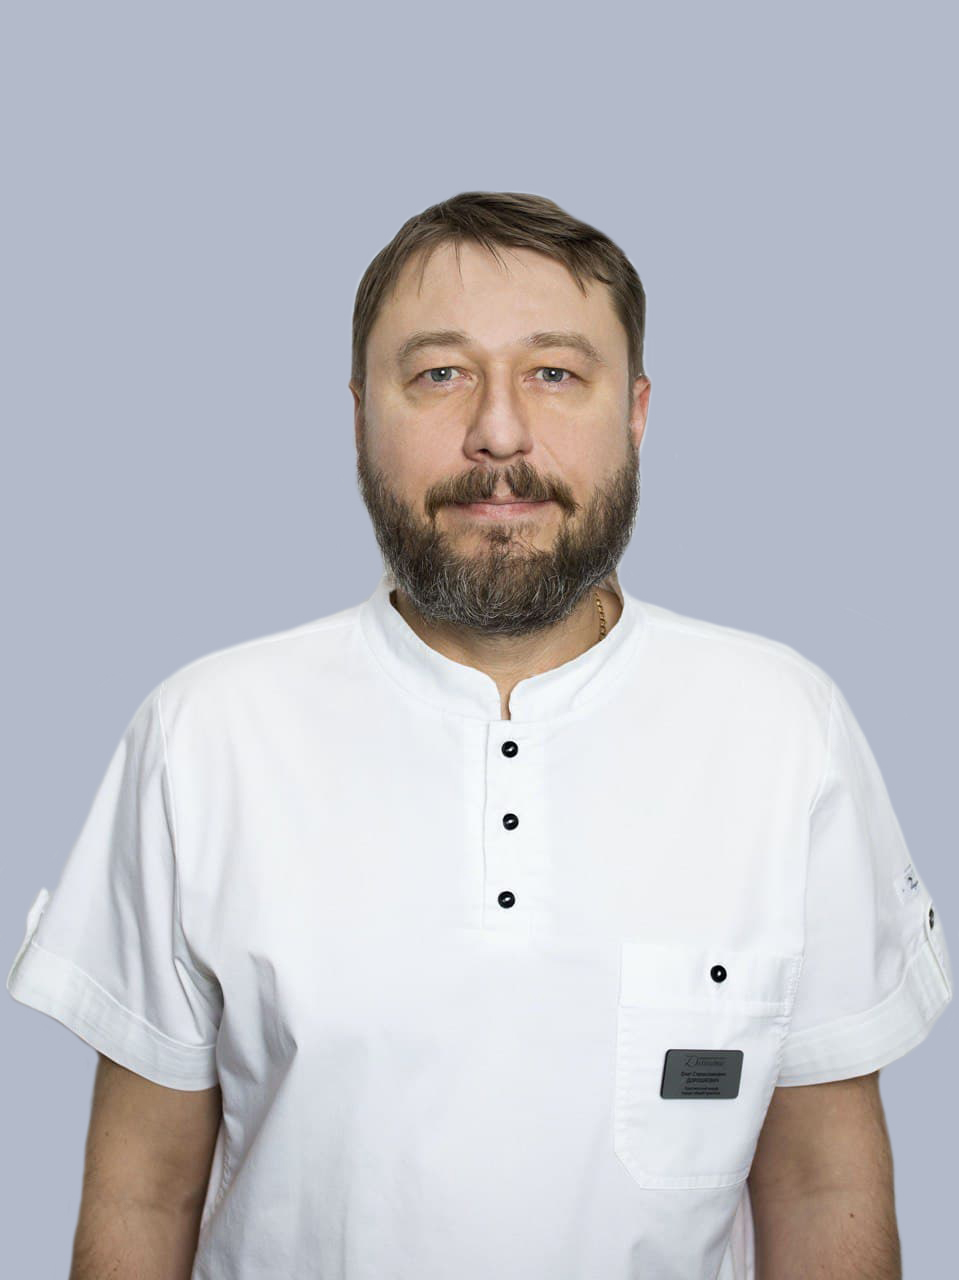 Олег Дорошкевич